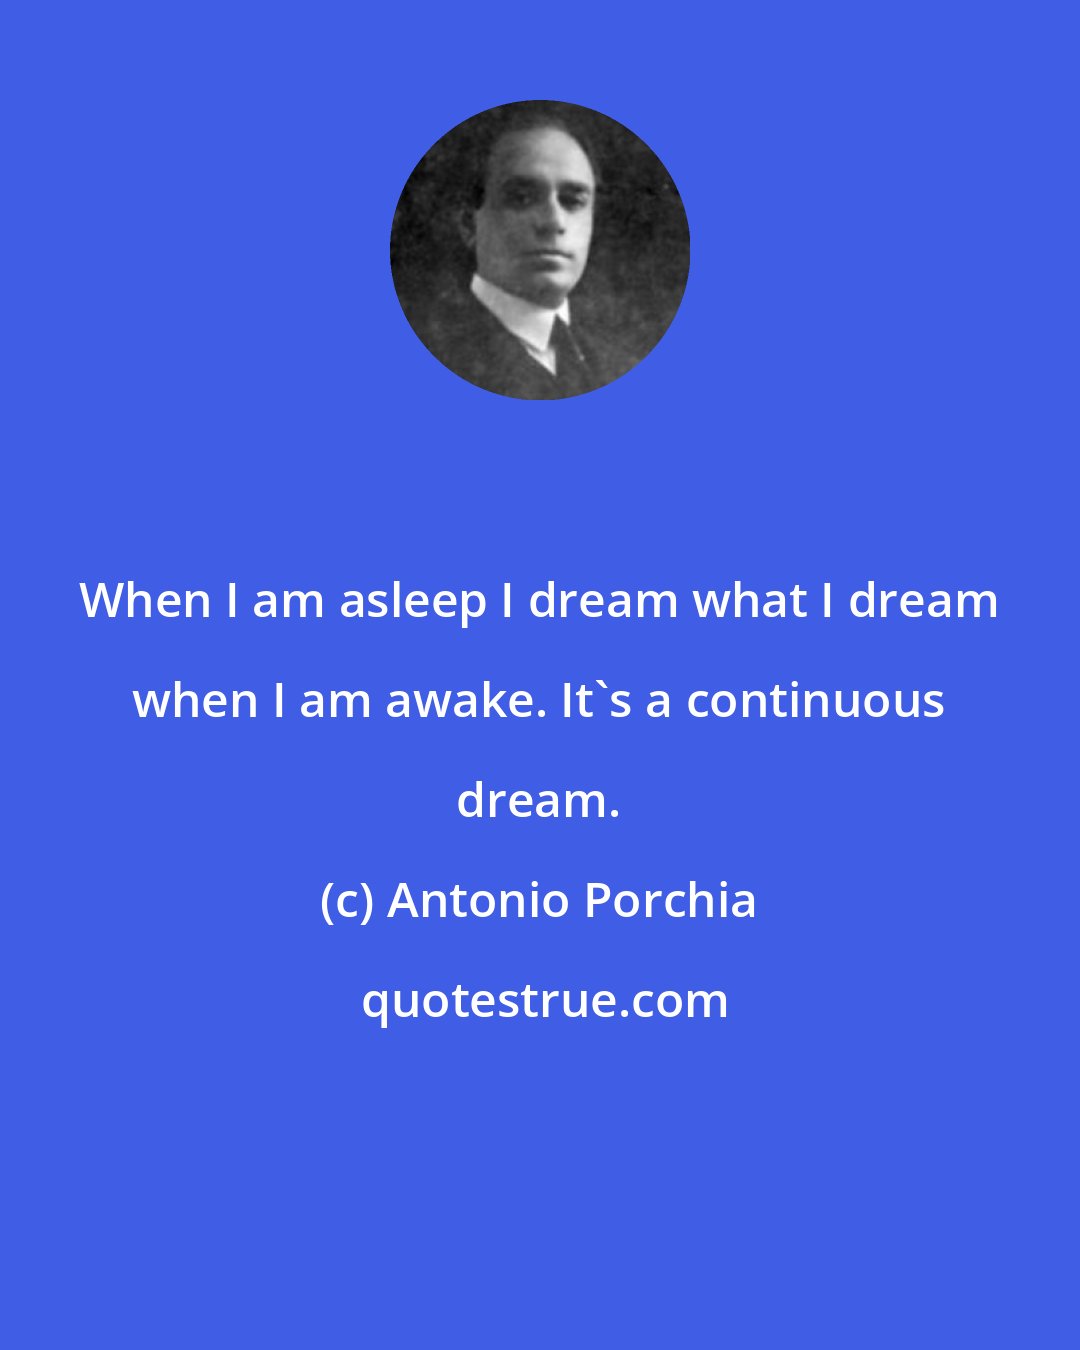 Antonio Porchia: When I am asleep I dream what I dream when I am awake. It's a continuous dream.